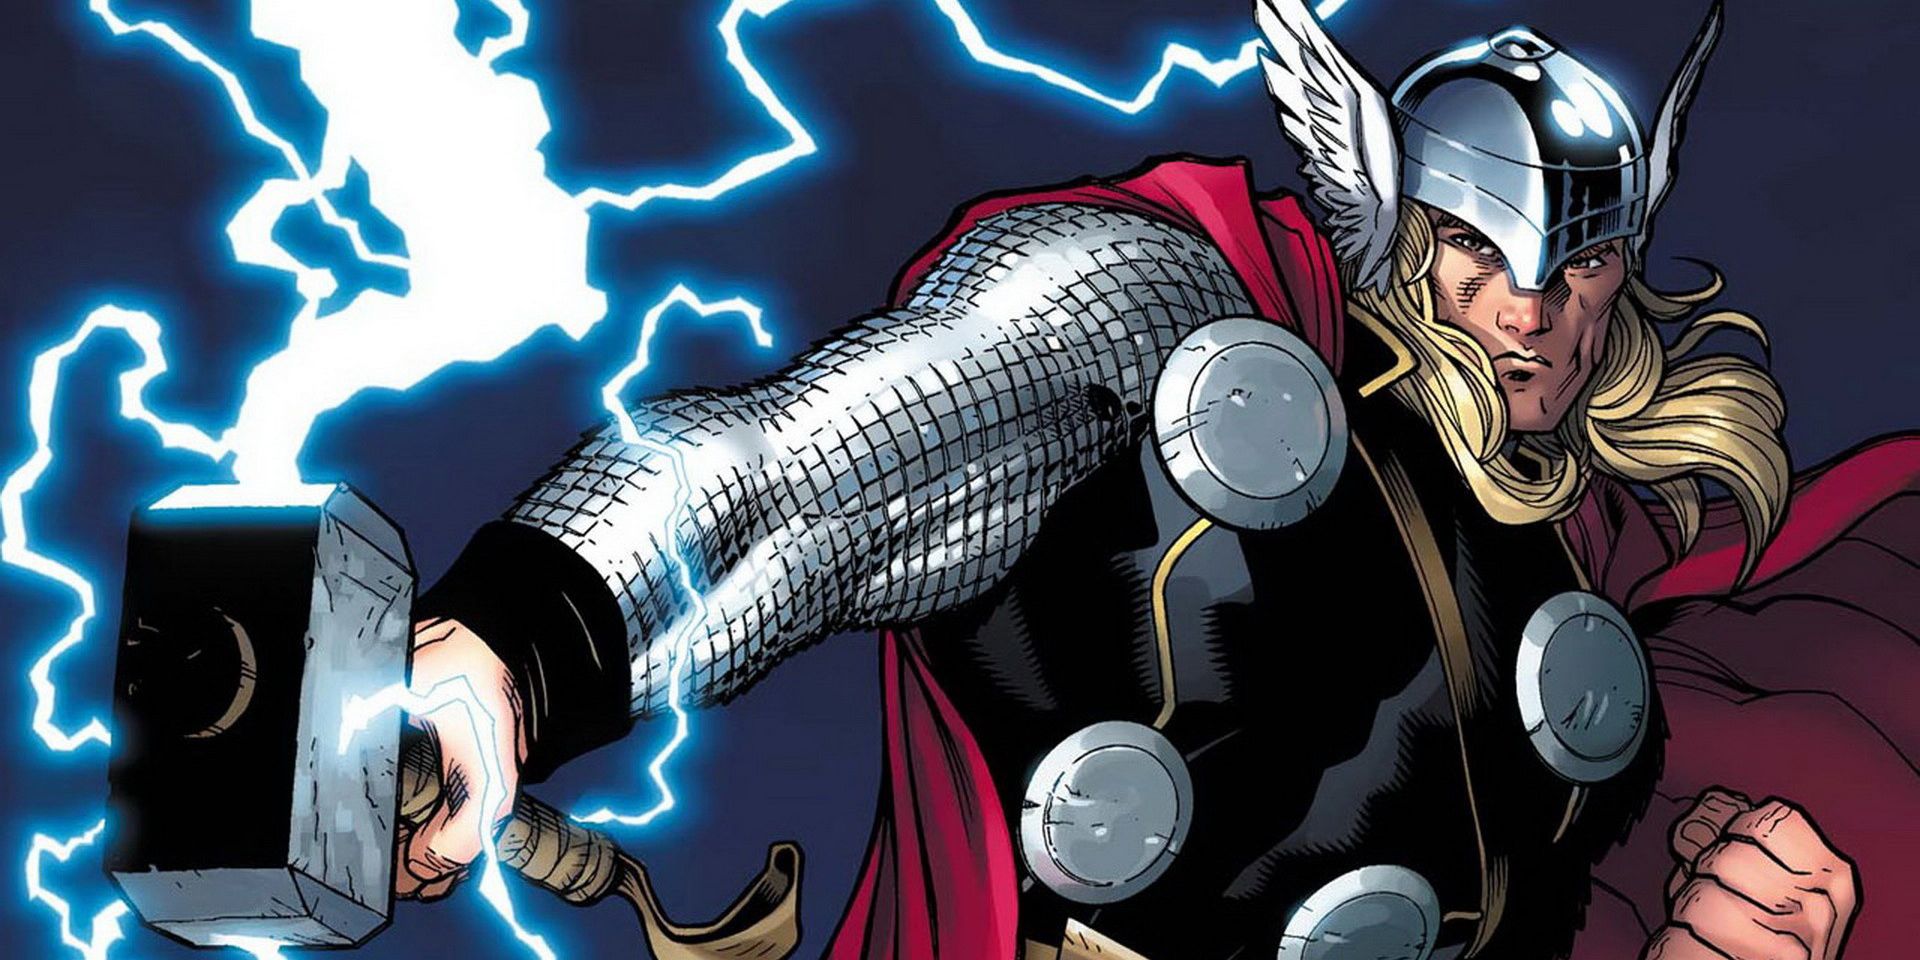 Marvel Comics' Thor Odinson with his hammer Mjolnir